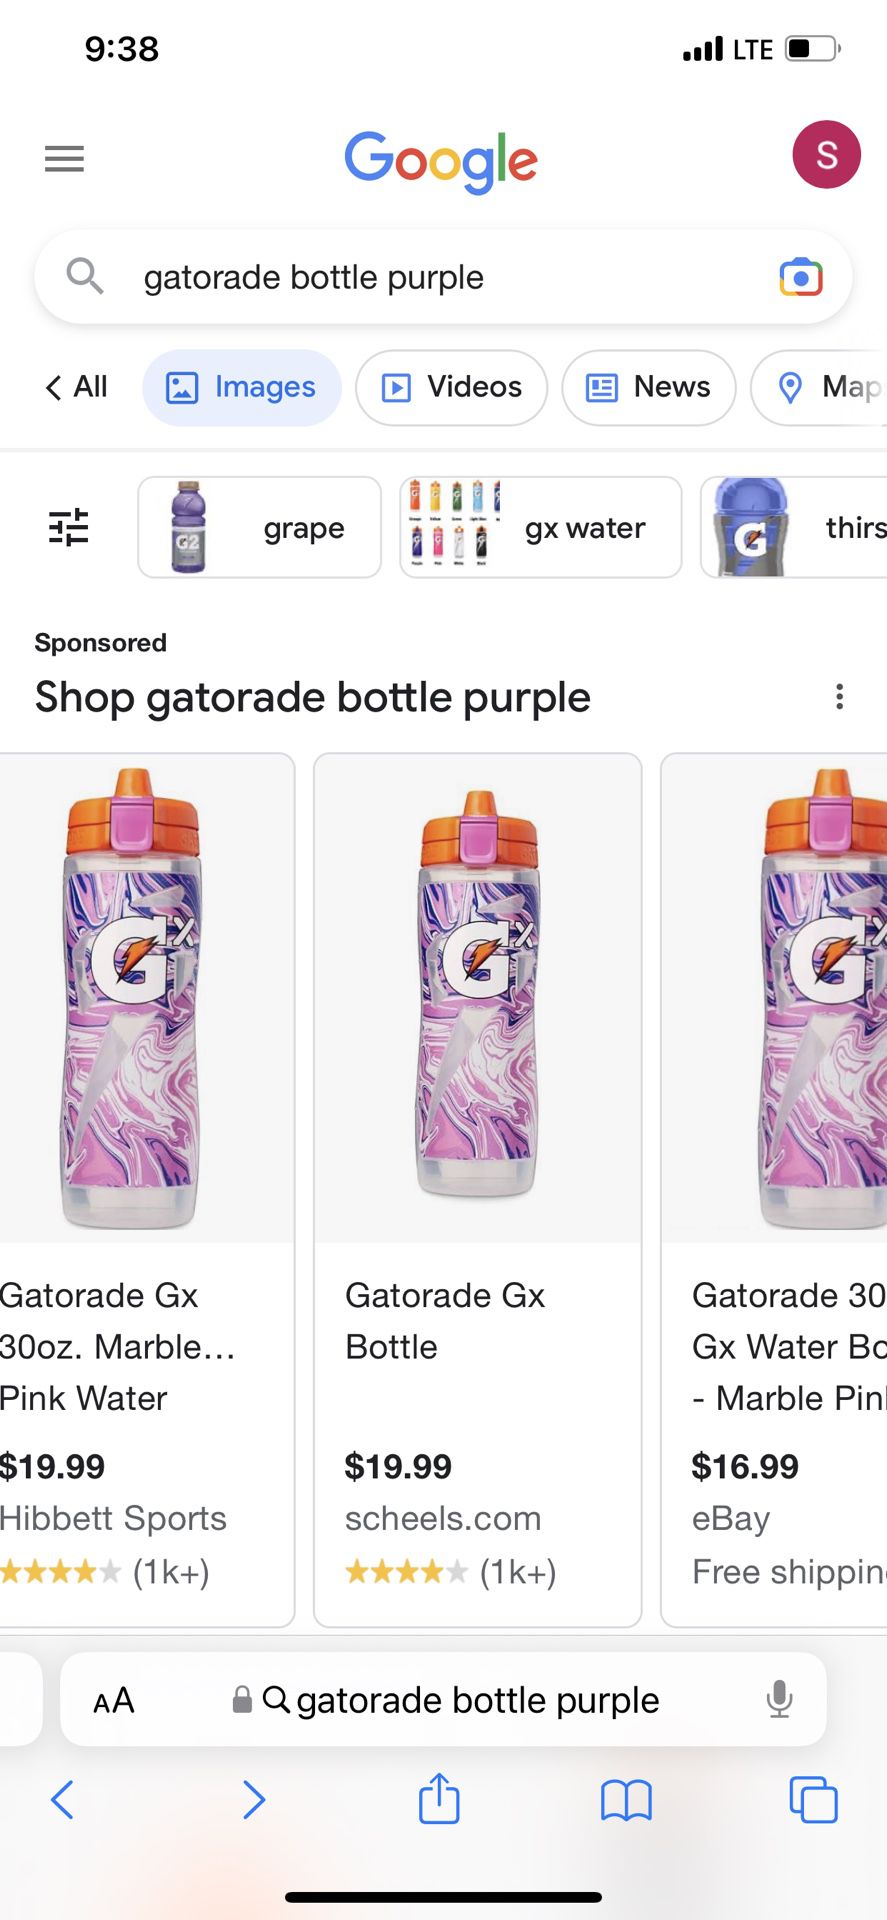 Gatorade 30oz GX Water Bottle - Marble Pink MSRP $19.99